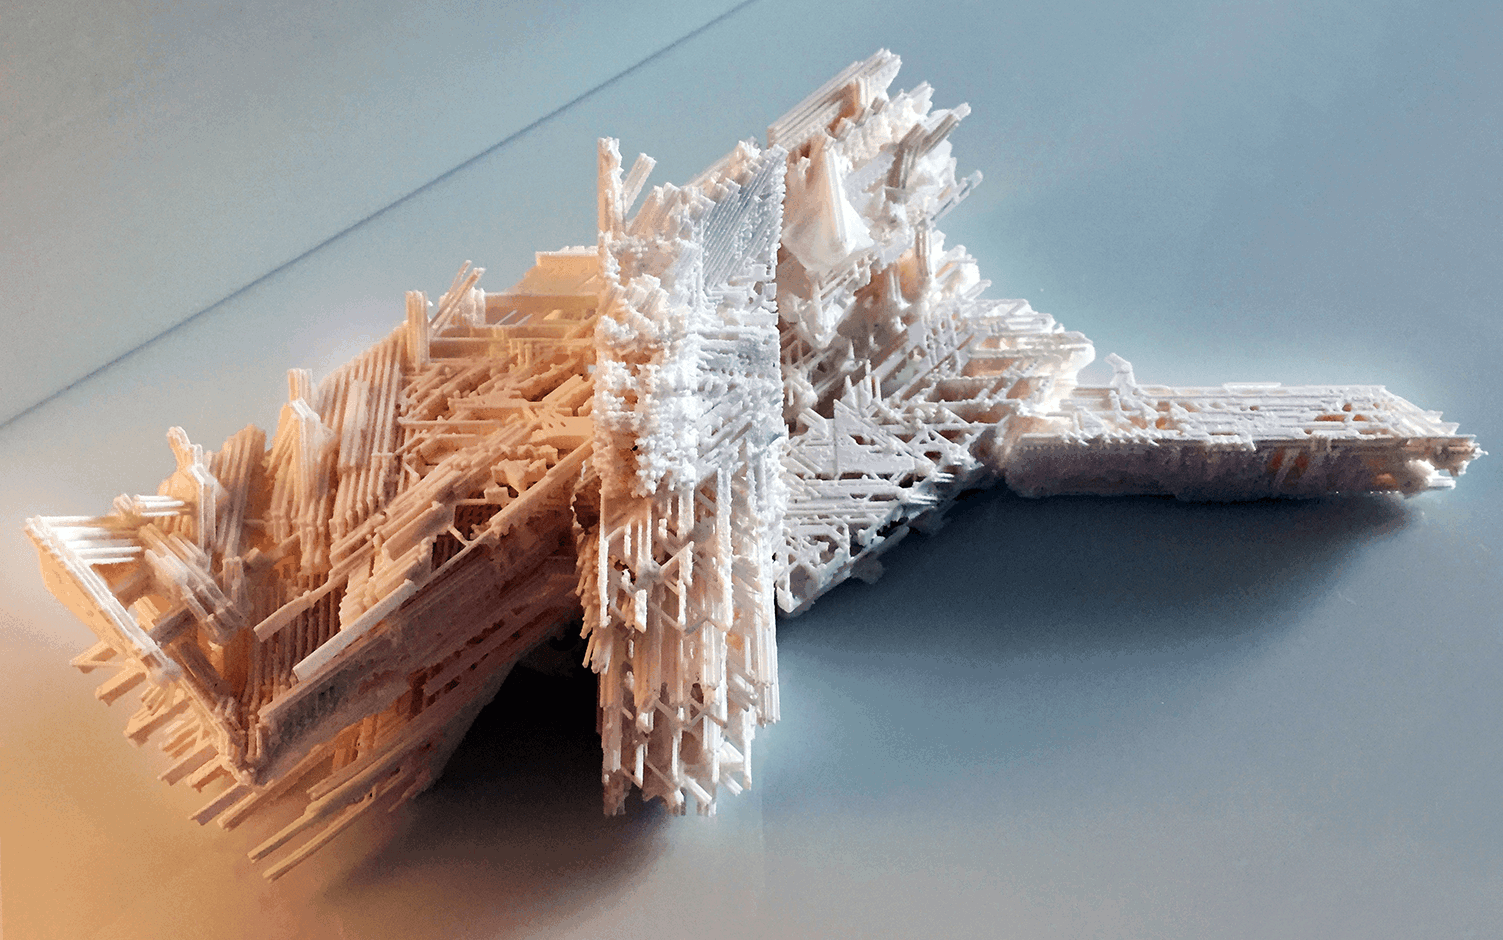 3D printed Architetcural model in orange and blue lighting